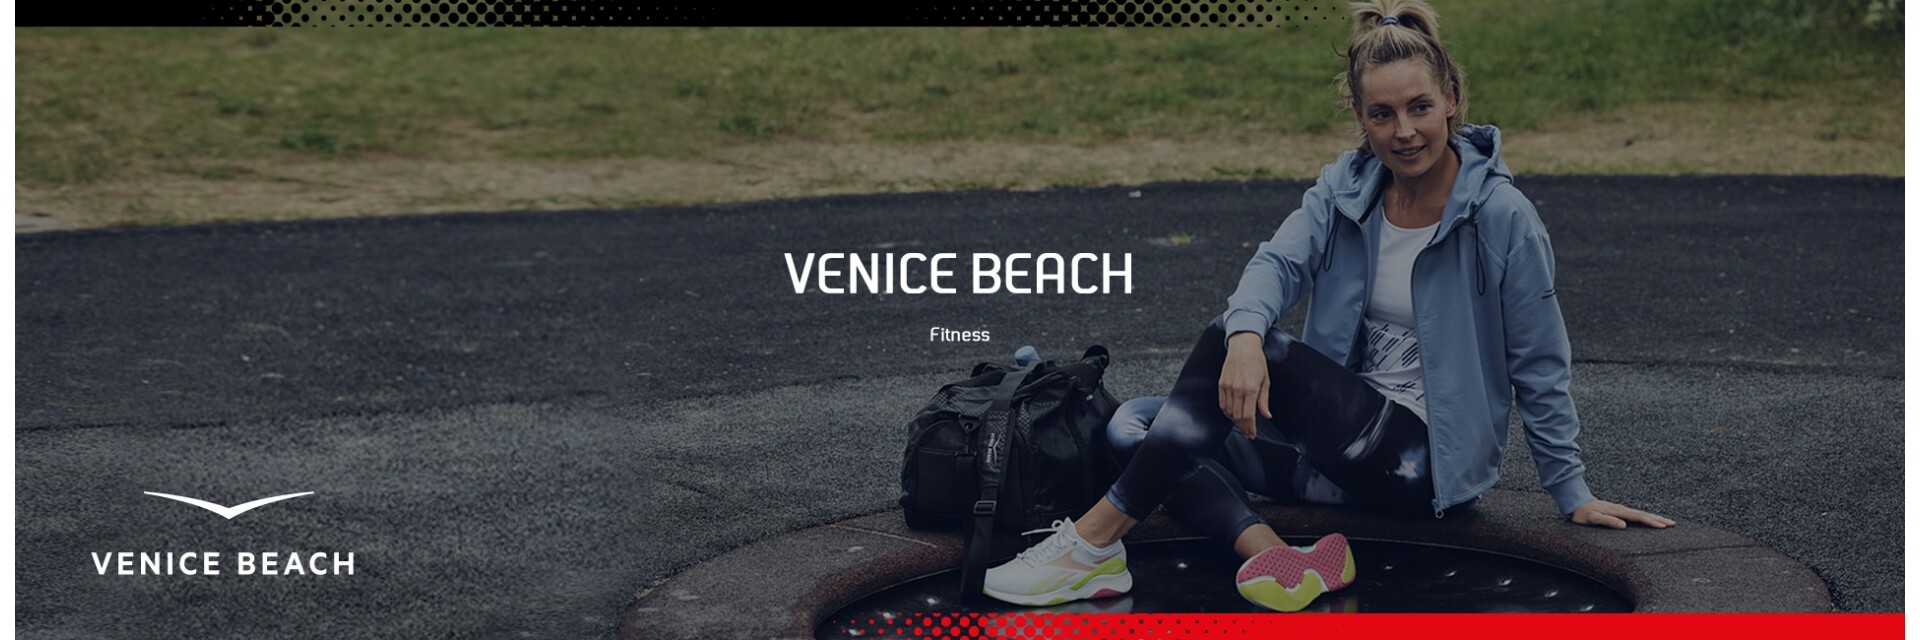 Venice Beach Fitness HW 22 Banner